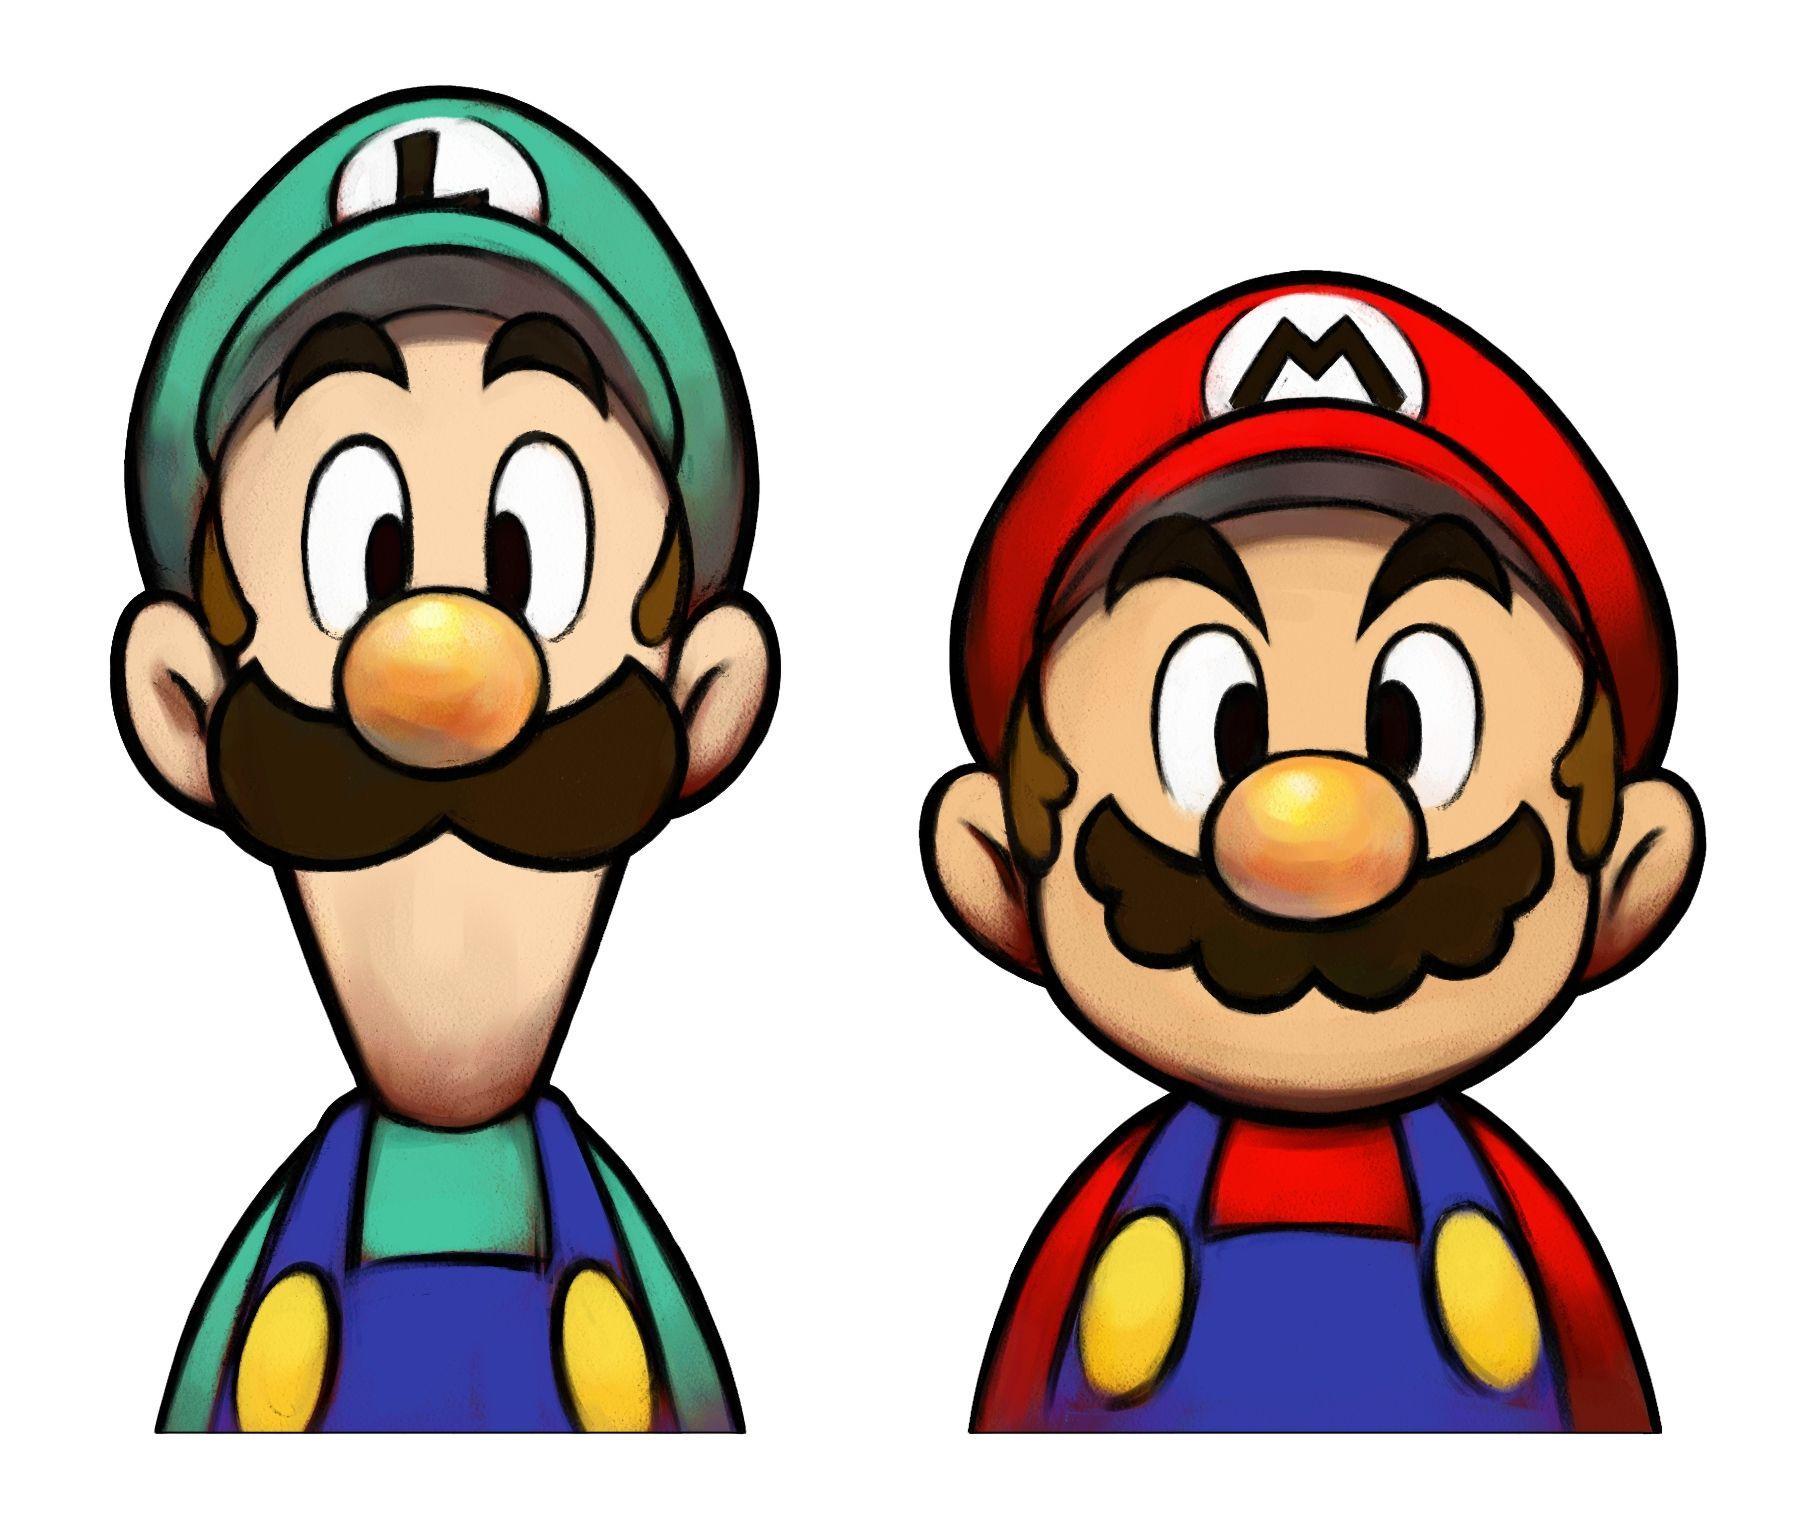 Mario and Luigi Logo - Mario And Luigi Have Another Brother? | My Nintendo News